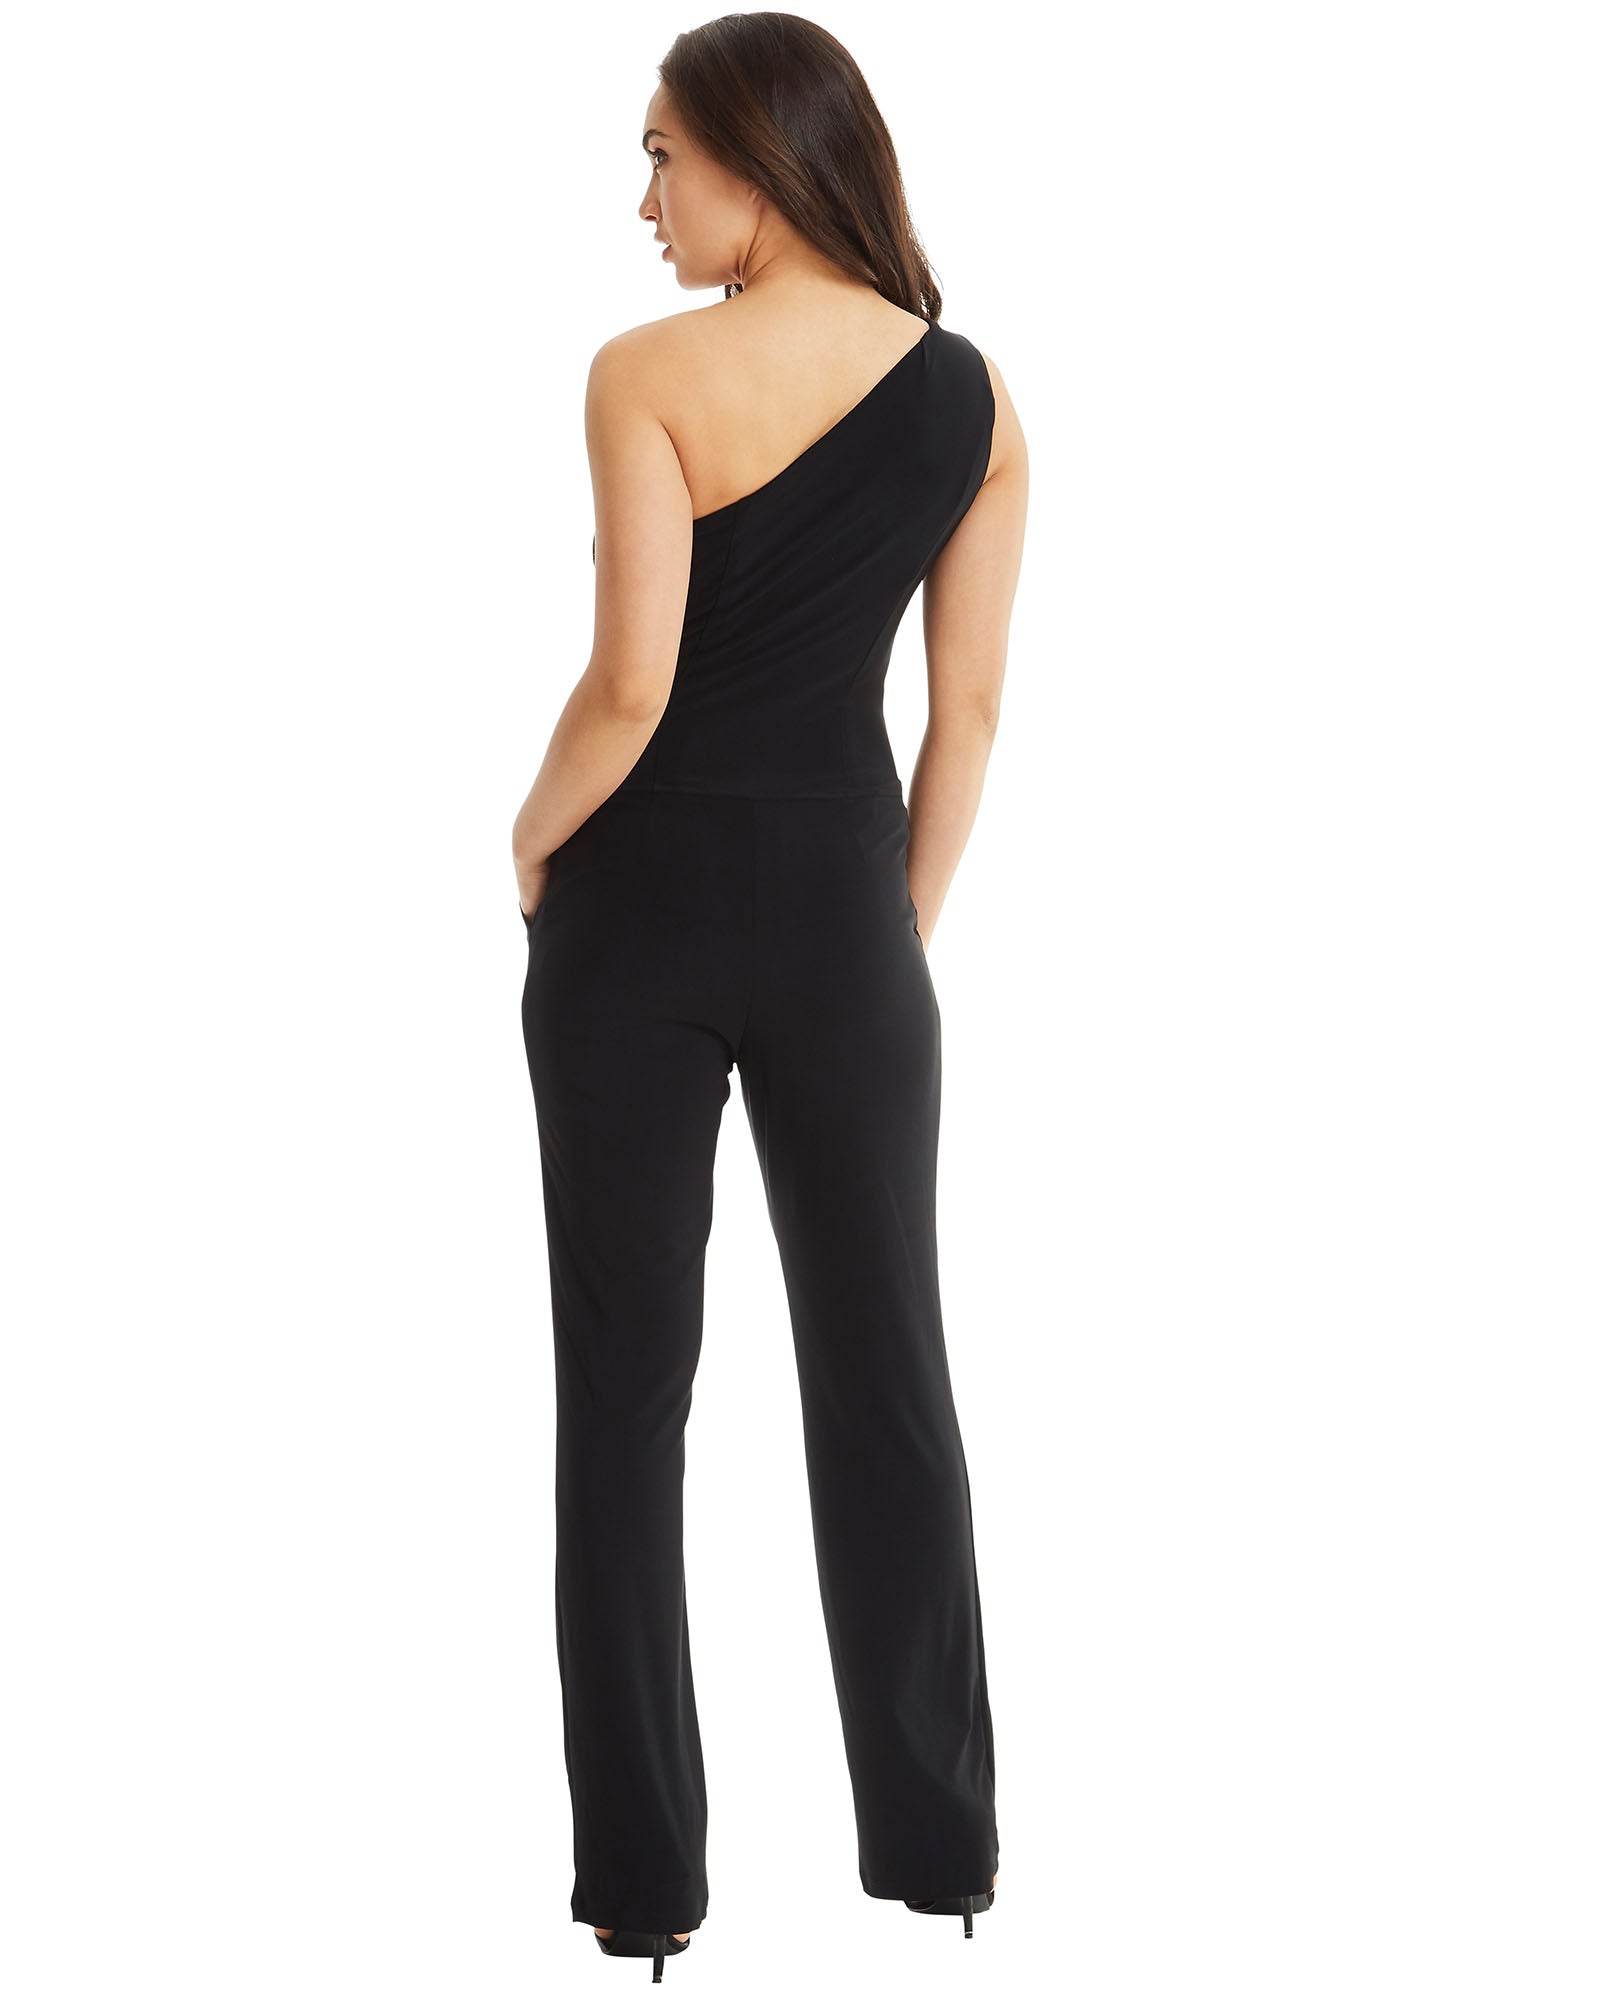 SKIVA one shoulder jumpsuit pantsuit black pockets stretch jersey fabric fully lined